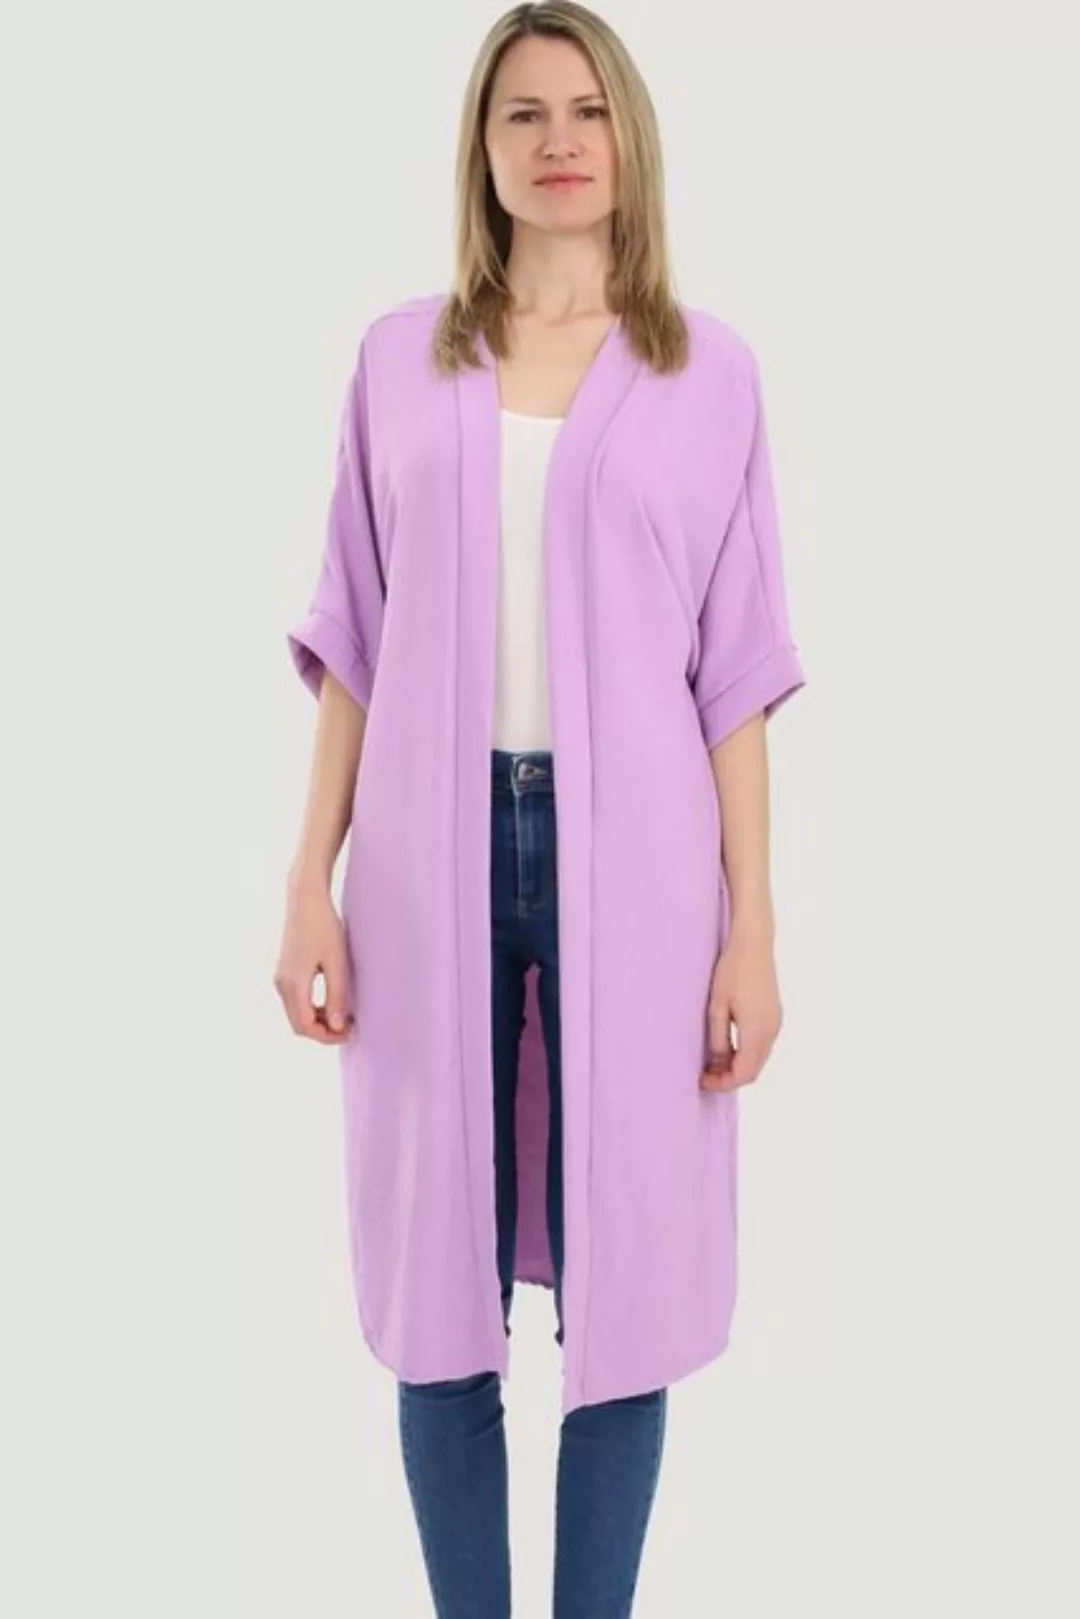 malito more than fashion Cardigan 2342 Kimono Sommer Strand Cover up mit ex günstig online kaufen